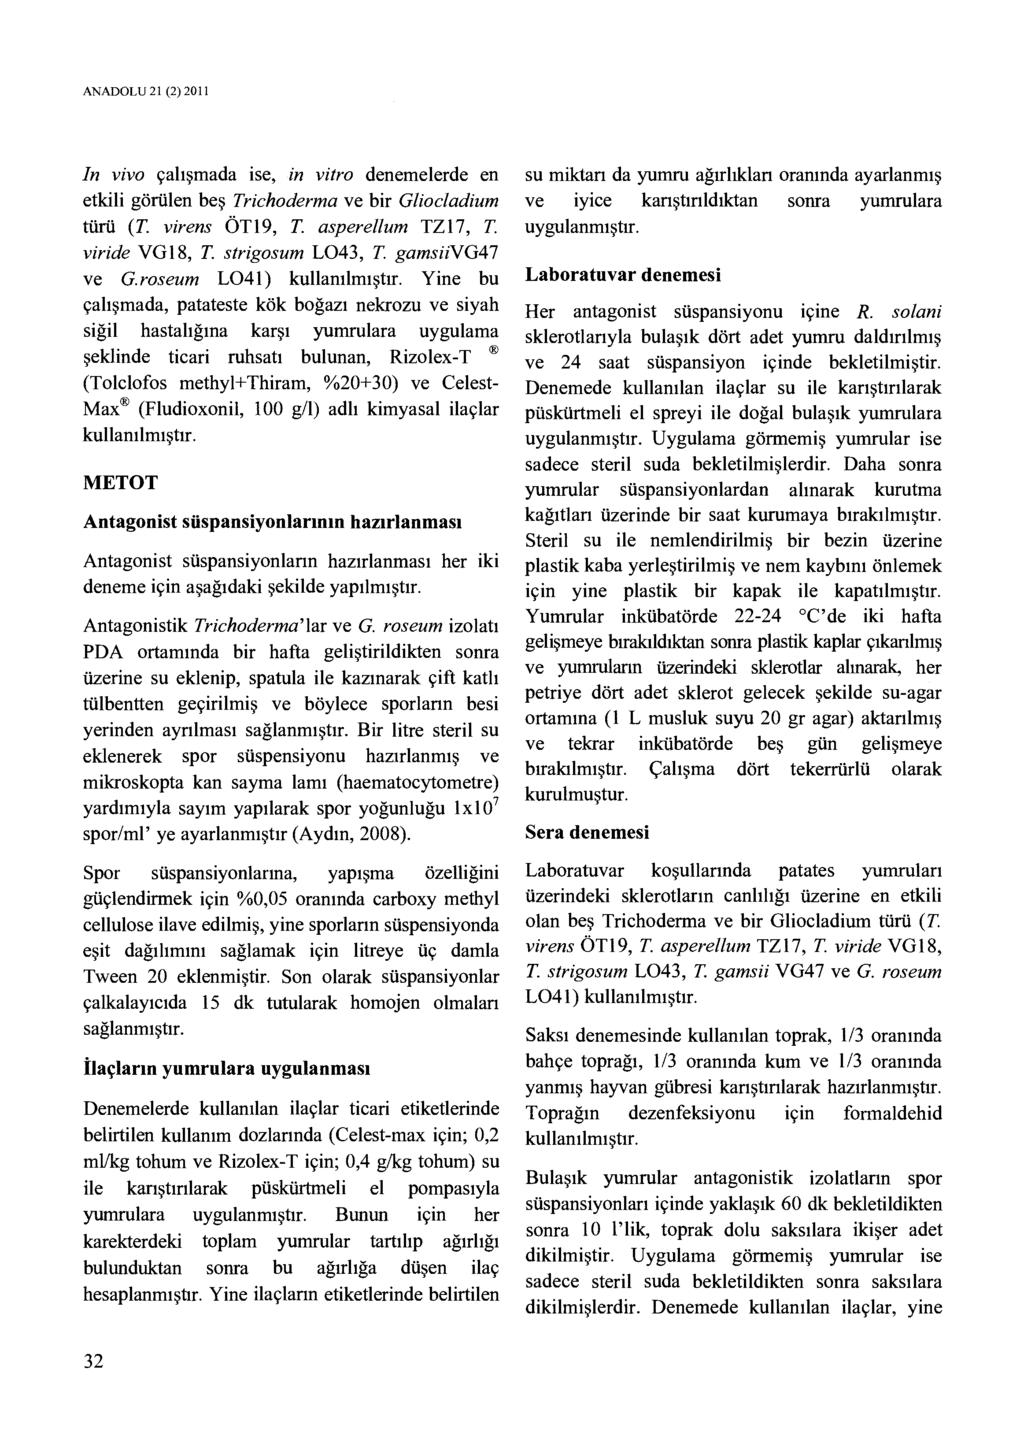 ANADOLU 21 (2) 2011 In vivo calignada ise, in vitro denemelerde en etkili goriilen be Trichoderma ye bir Gliocladium tart (T. virens OT19, T. asperellum TZ17, T. viride VG18, T strigosum L043, T.